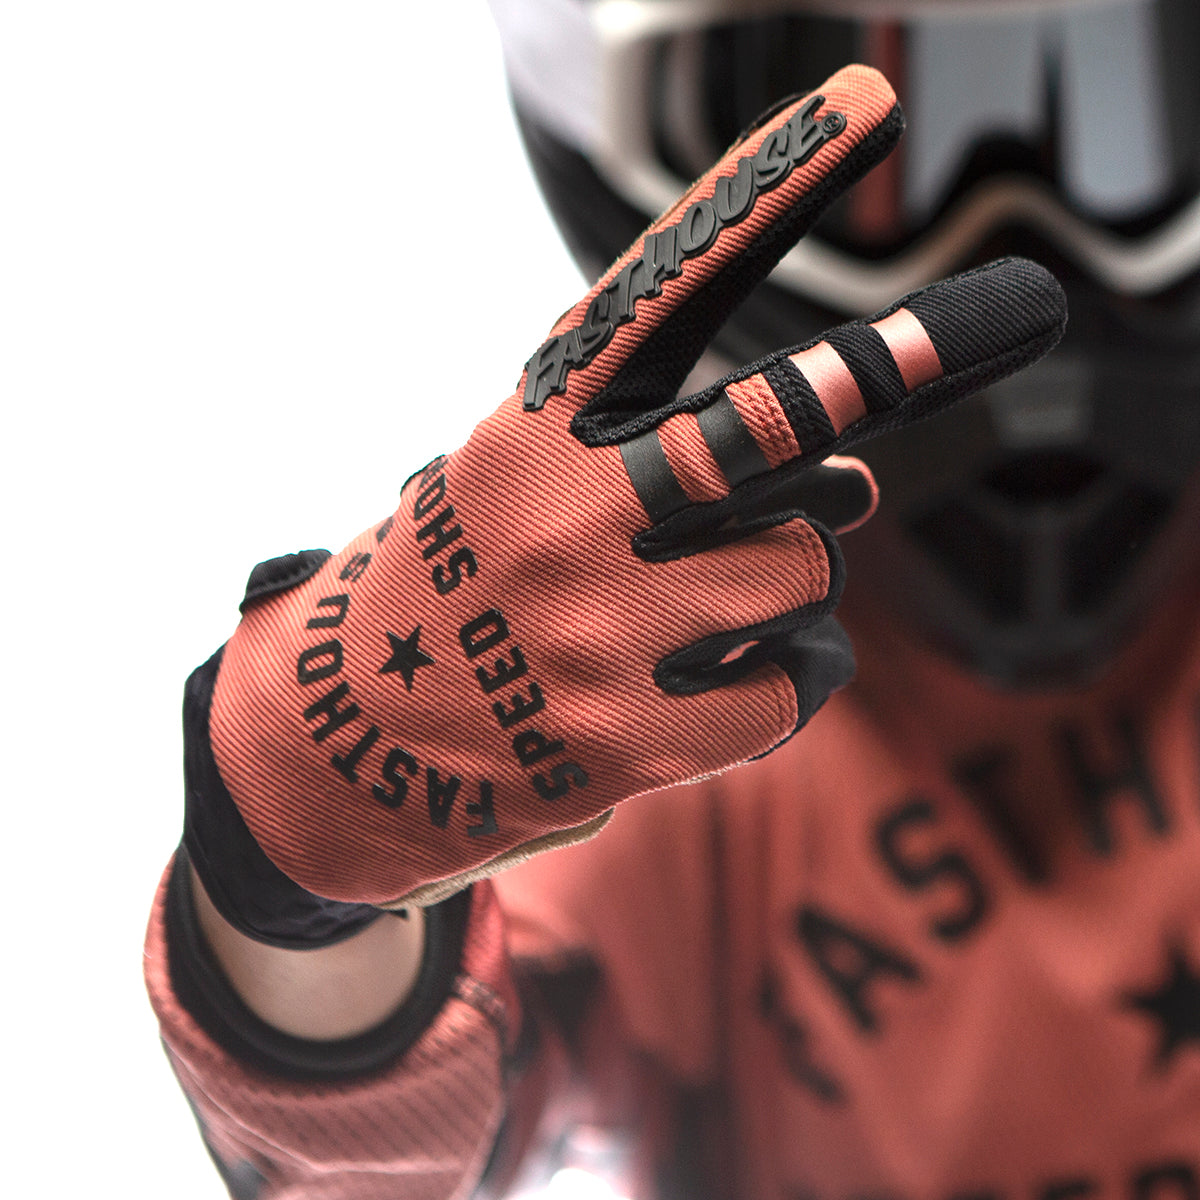 Speed Style Originals Glove - Mauve